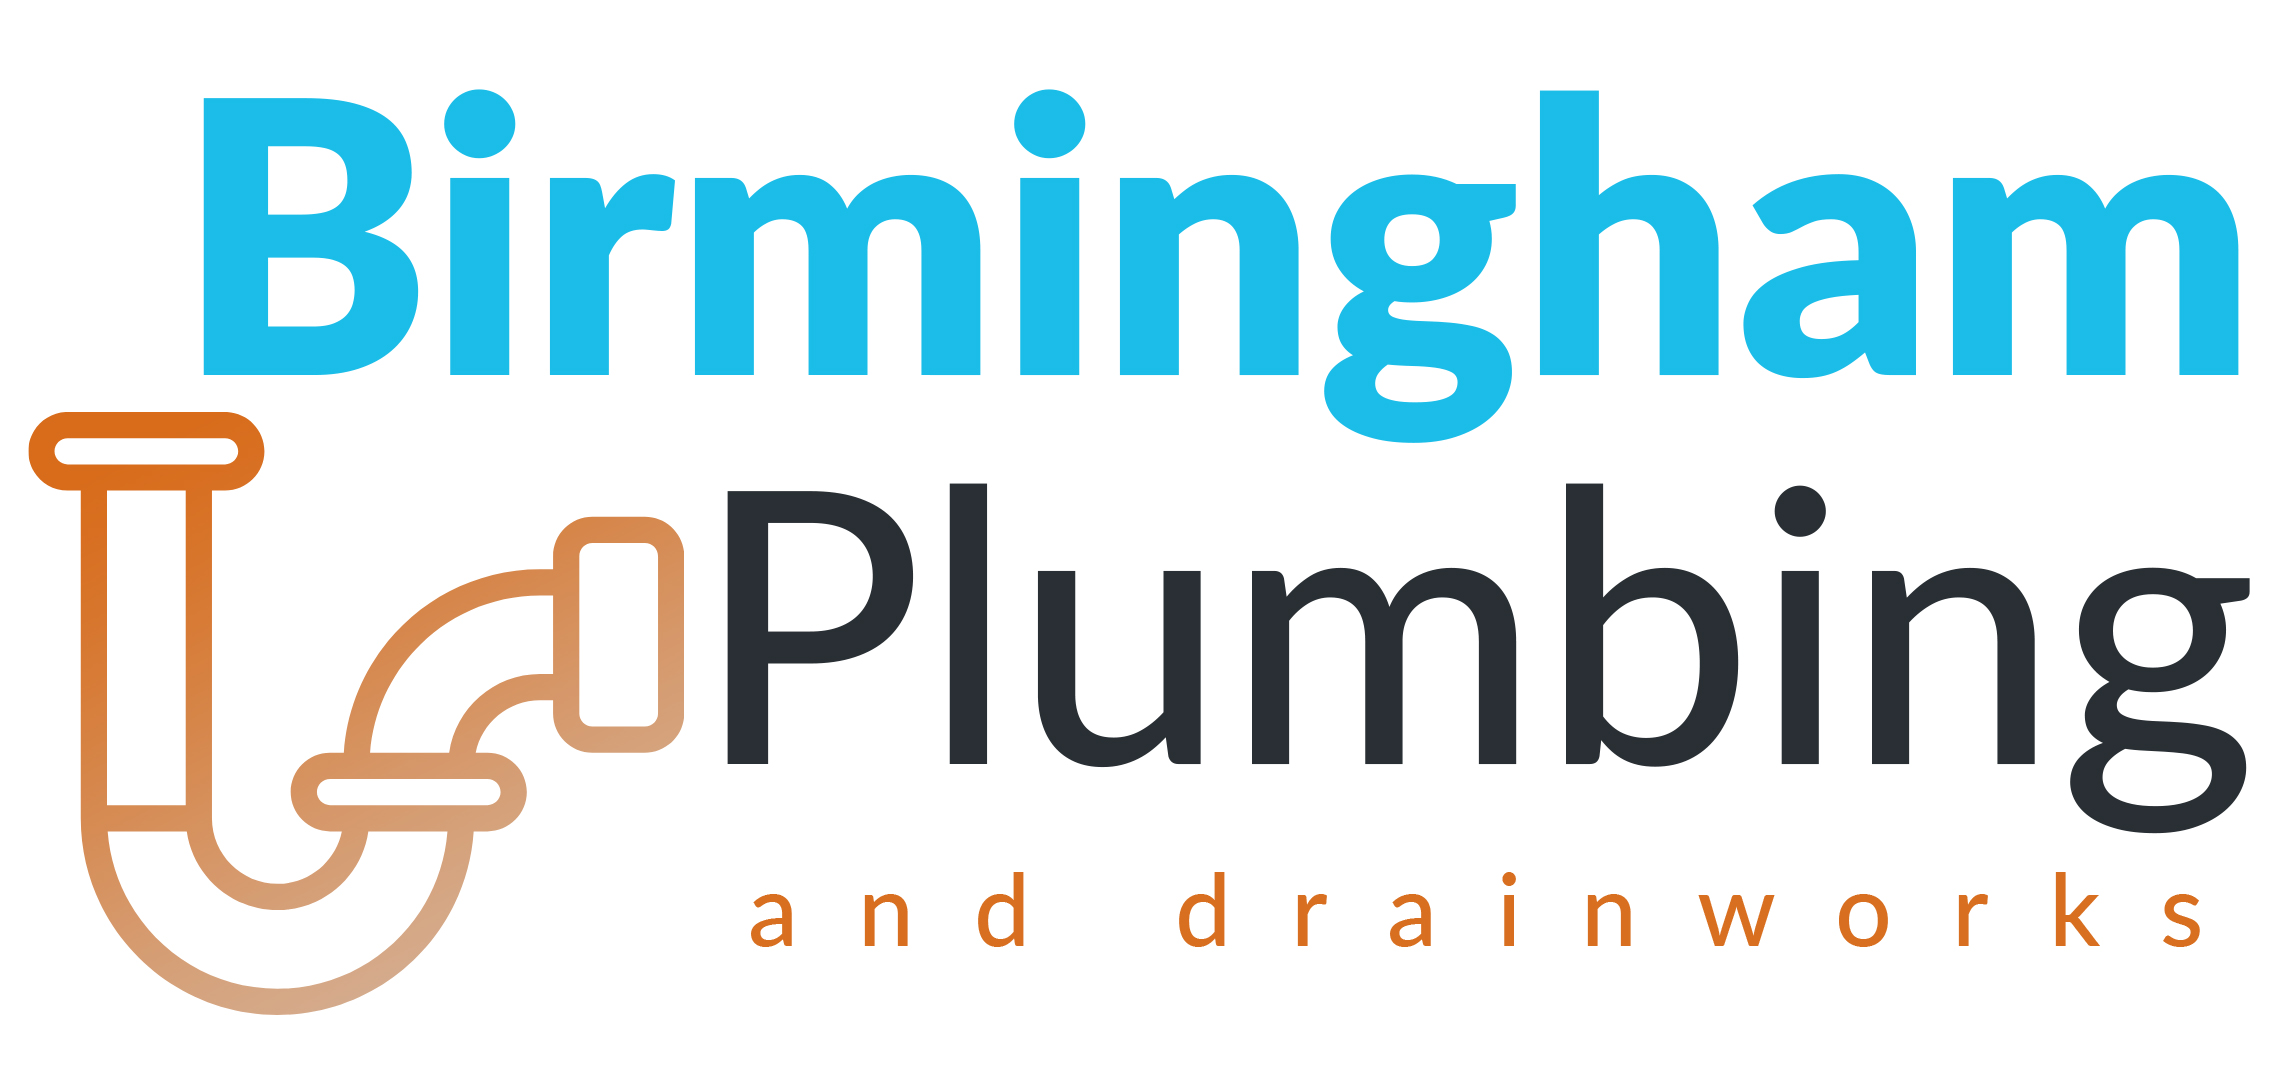 Birmingham’s Plumbing and Drainworks Services: Best Company, Alabama